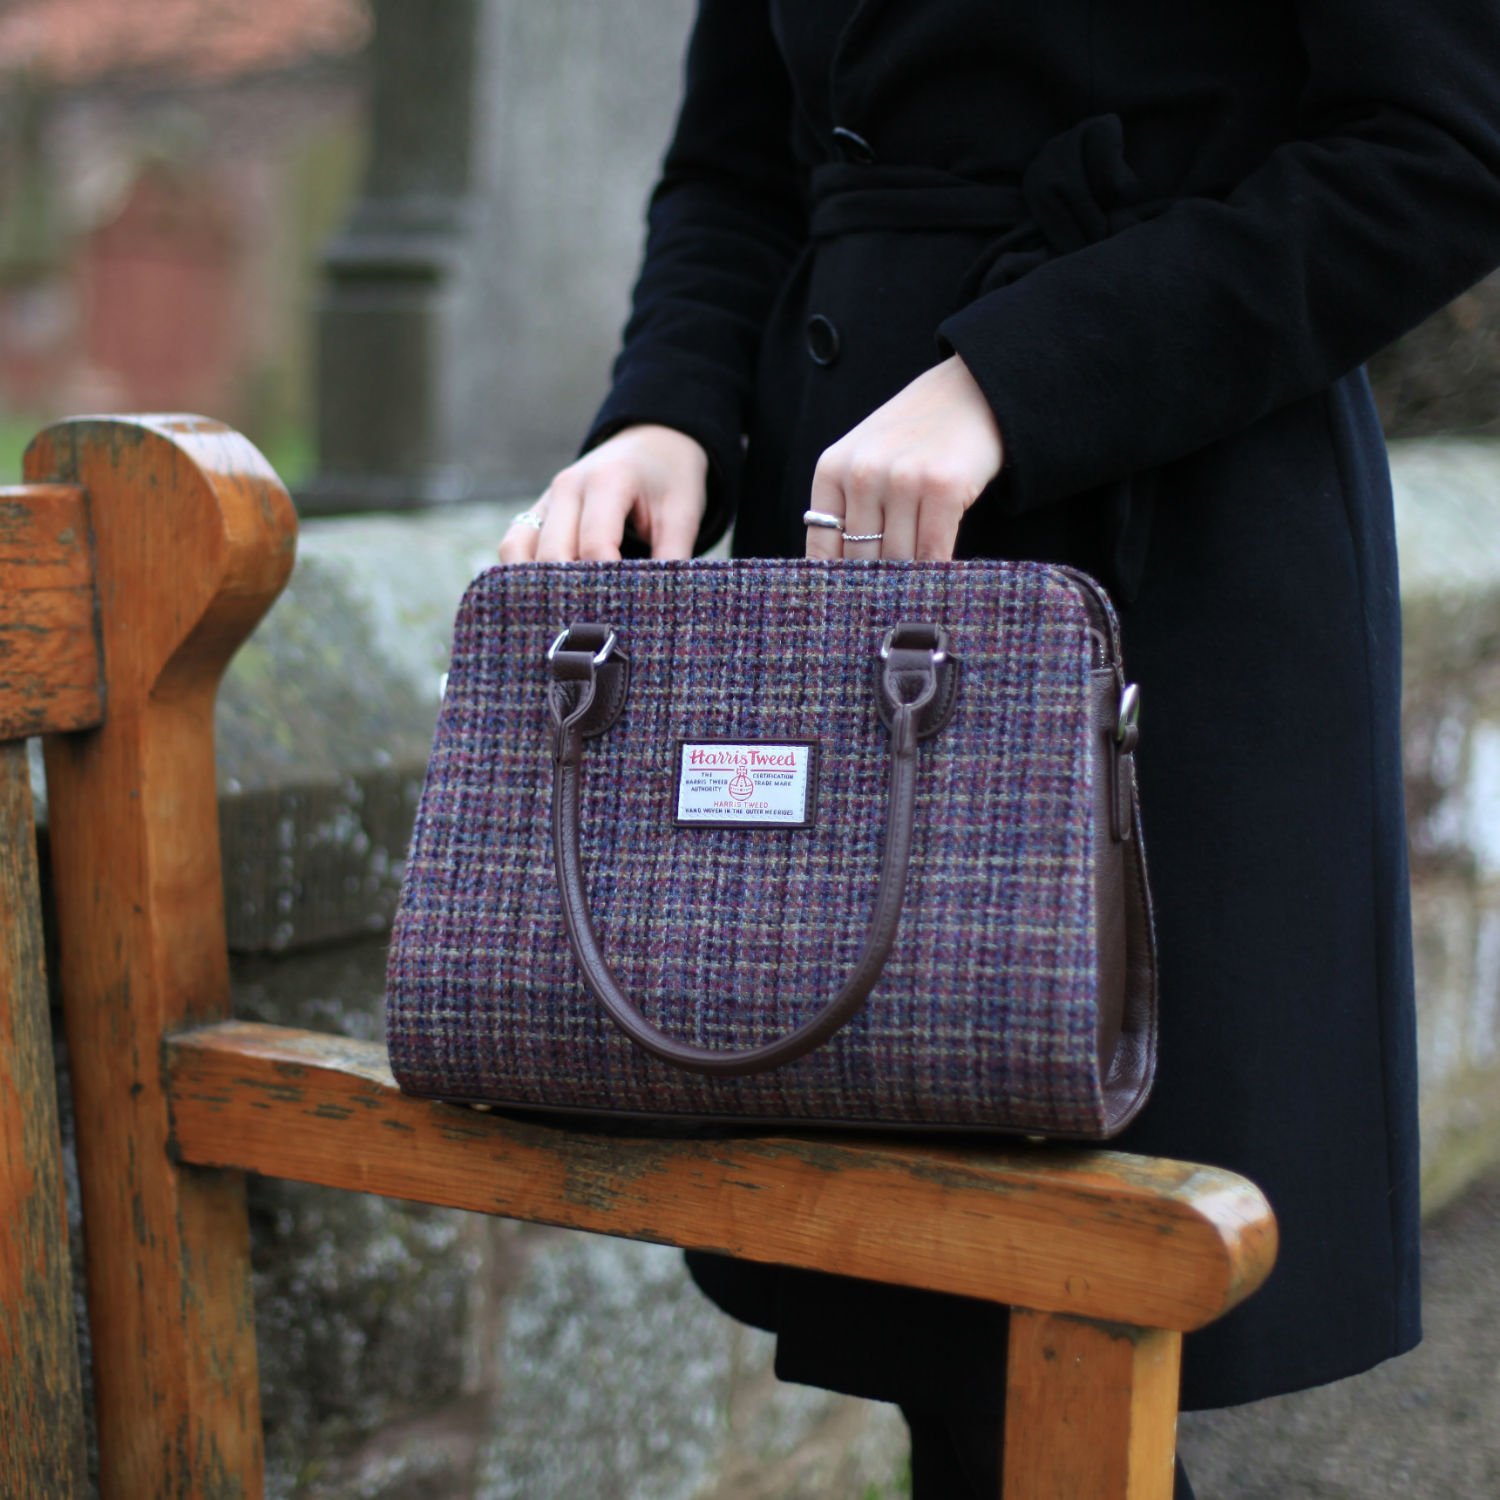 Glen Apprin Findhorn midi-size tote style handbag, colour 25